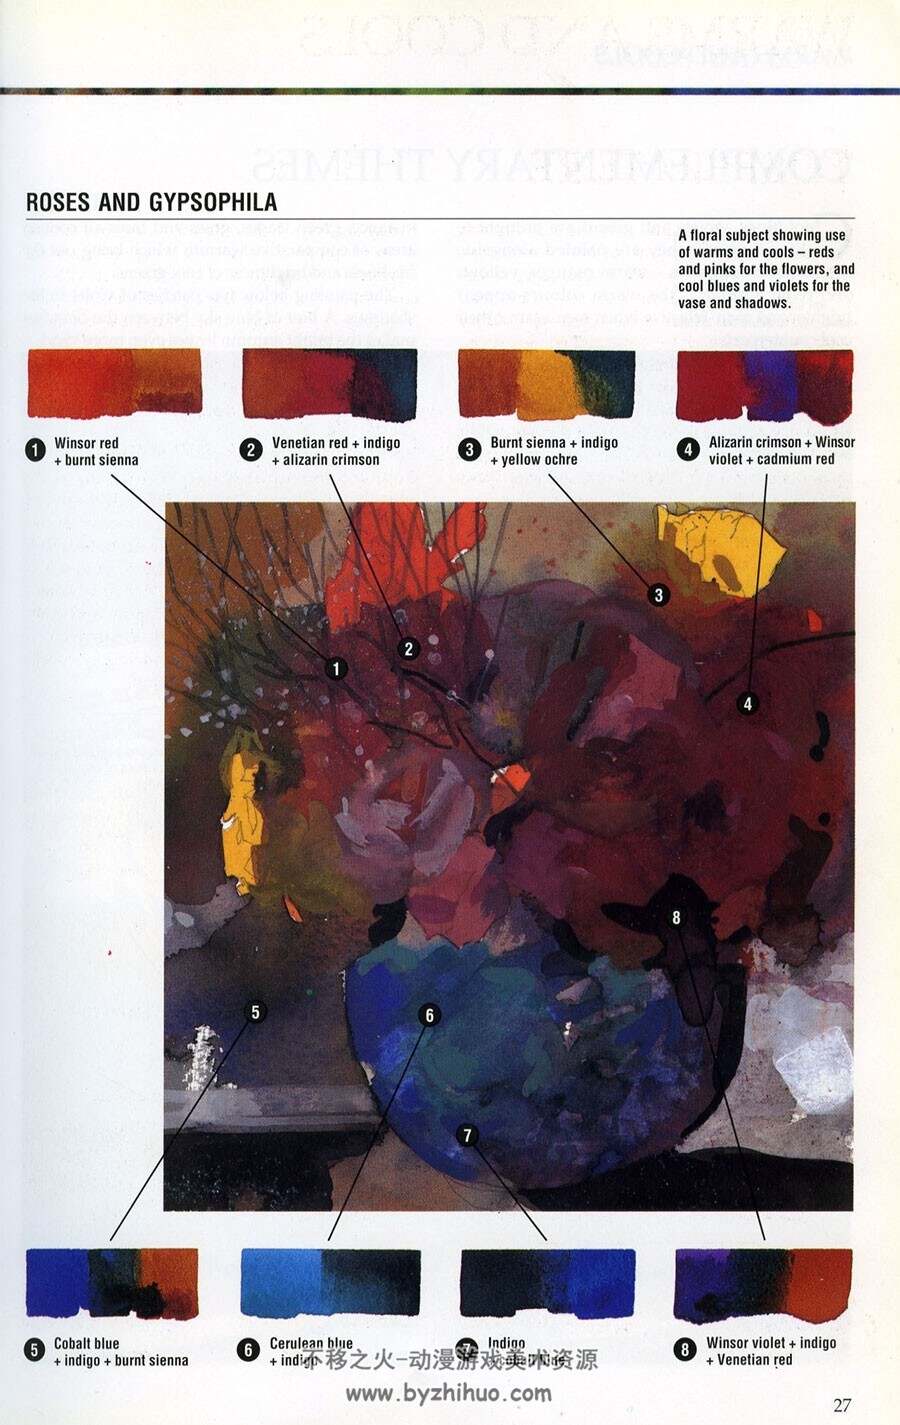 Mixing Colours 混合色彩 Jenny Rodwell 传统绘画颜色调和搭配教程 网盘下载